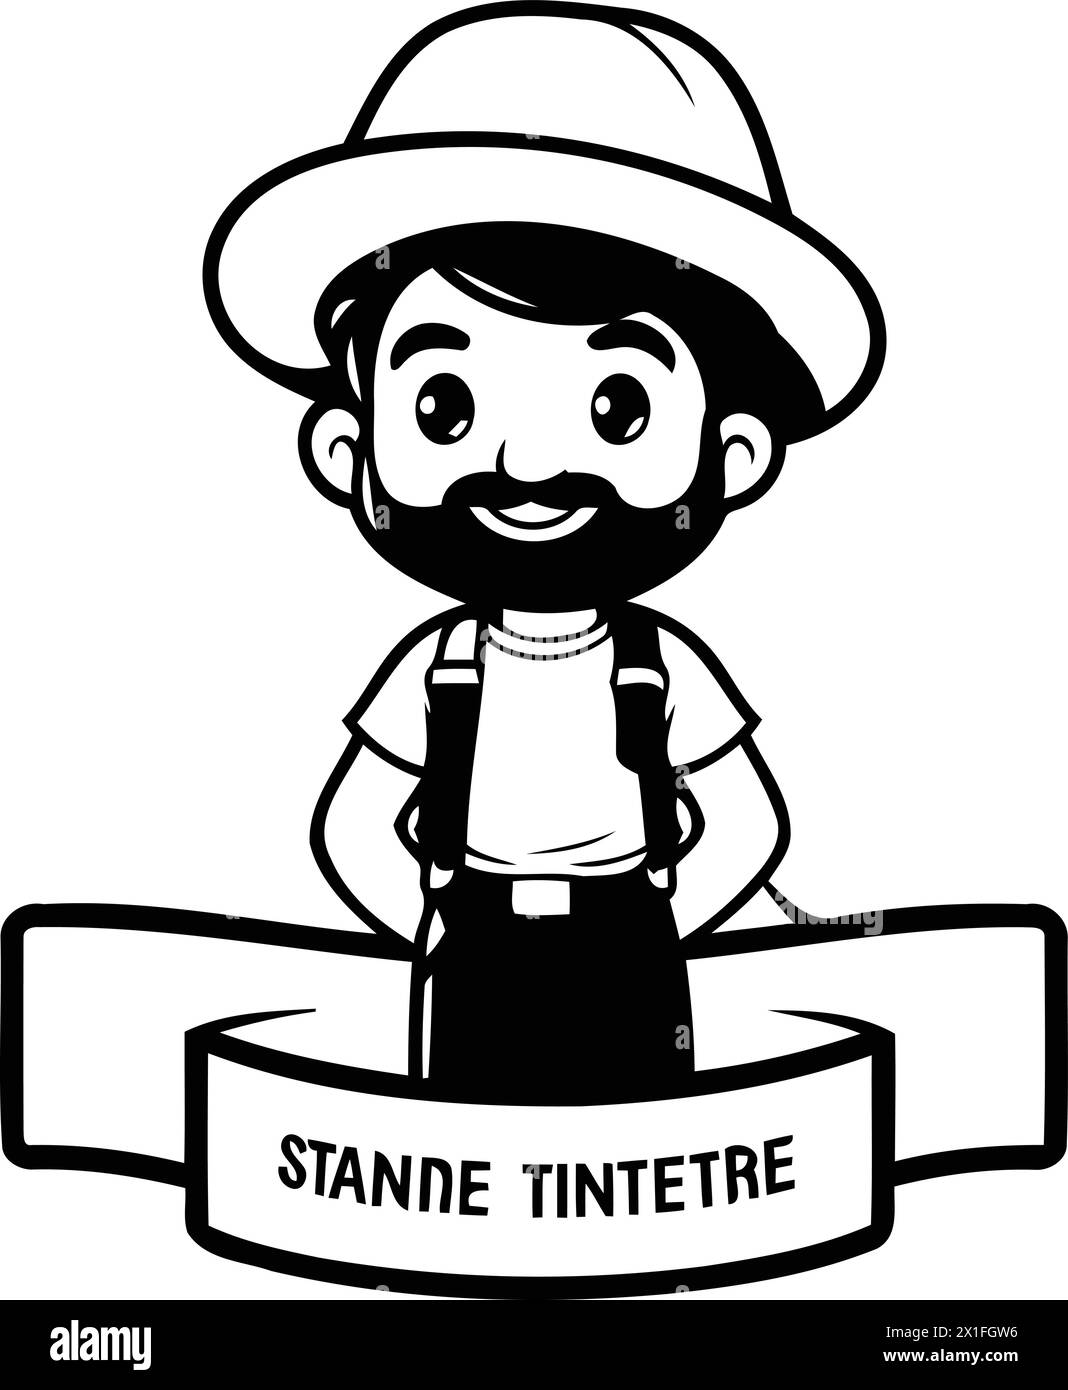 Gardener with hat and suspenders cartoon vector illustration graphic design Stock Vector